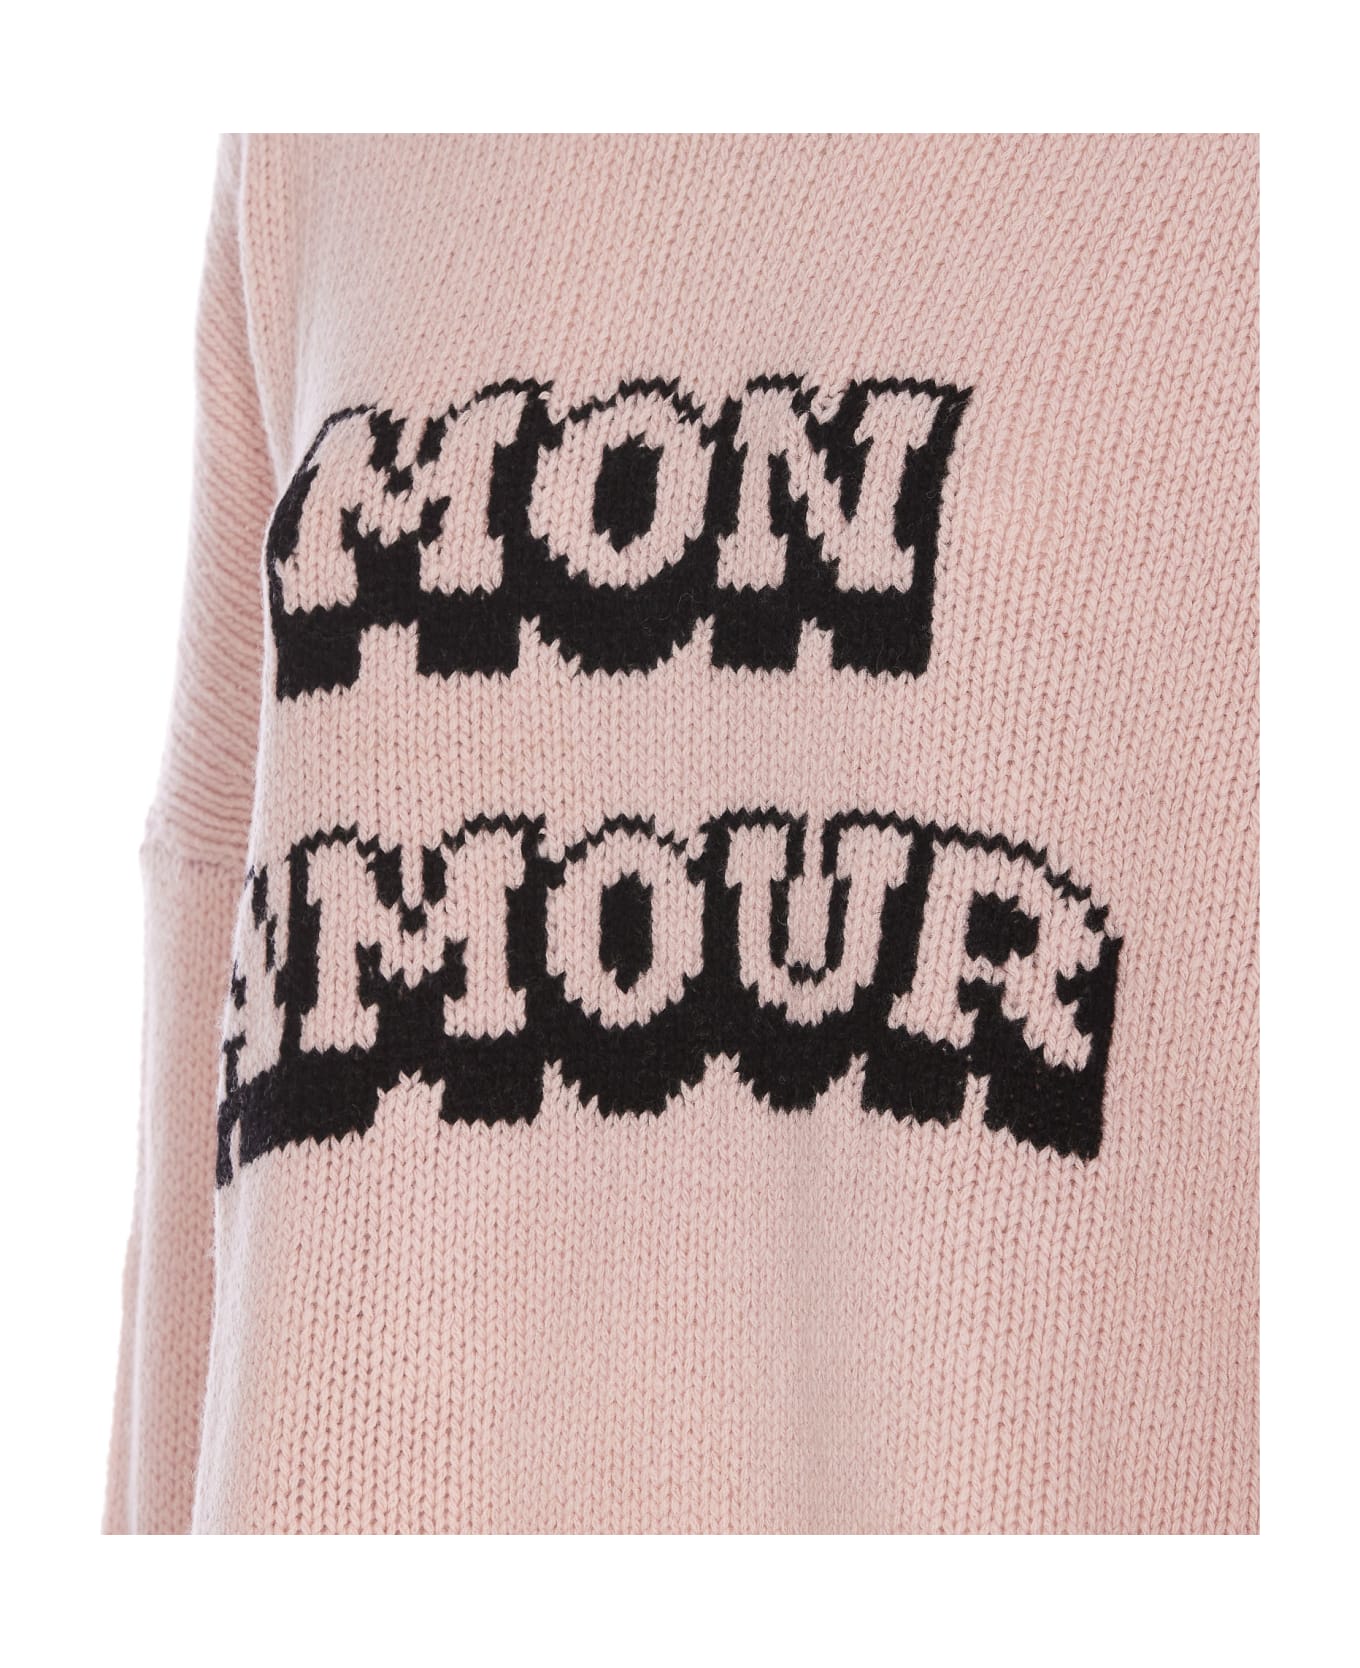 Zadig & Voltaire Malta Mon Amour Sweater - Pink ニットウェア